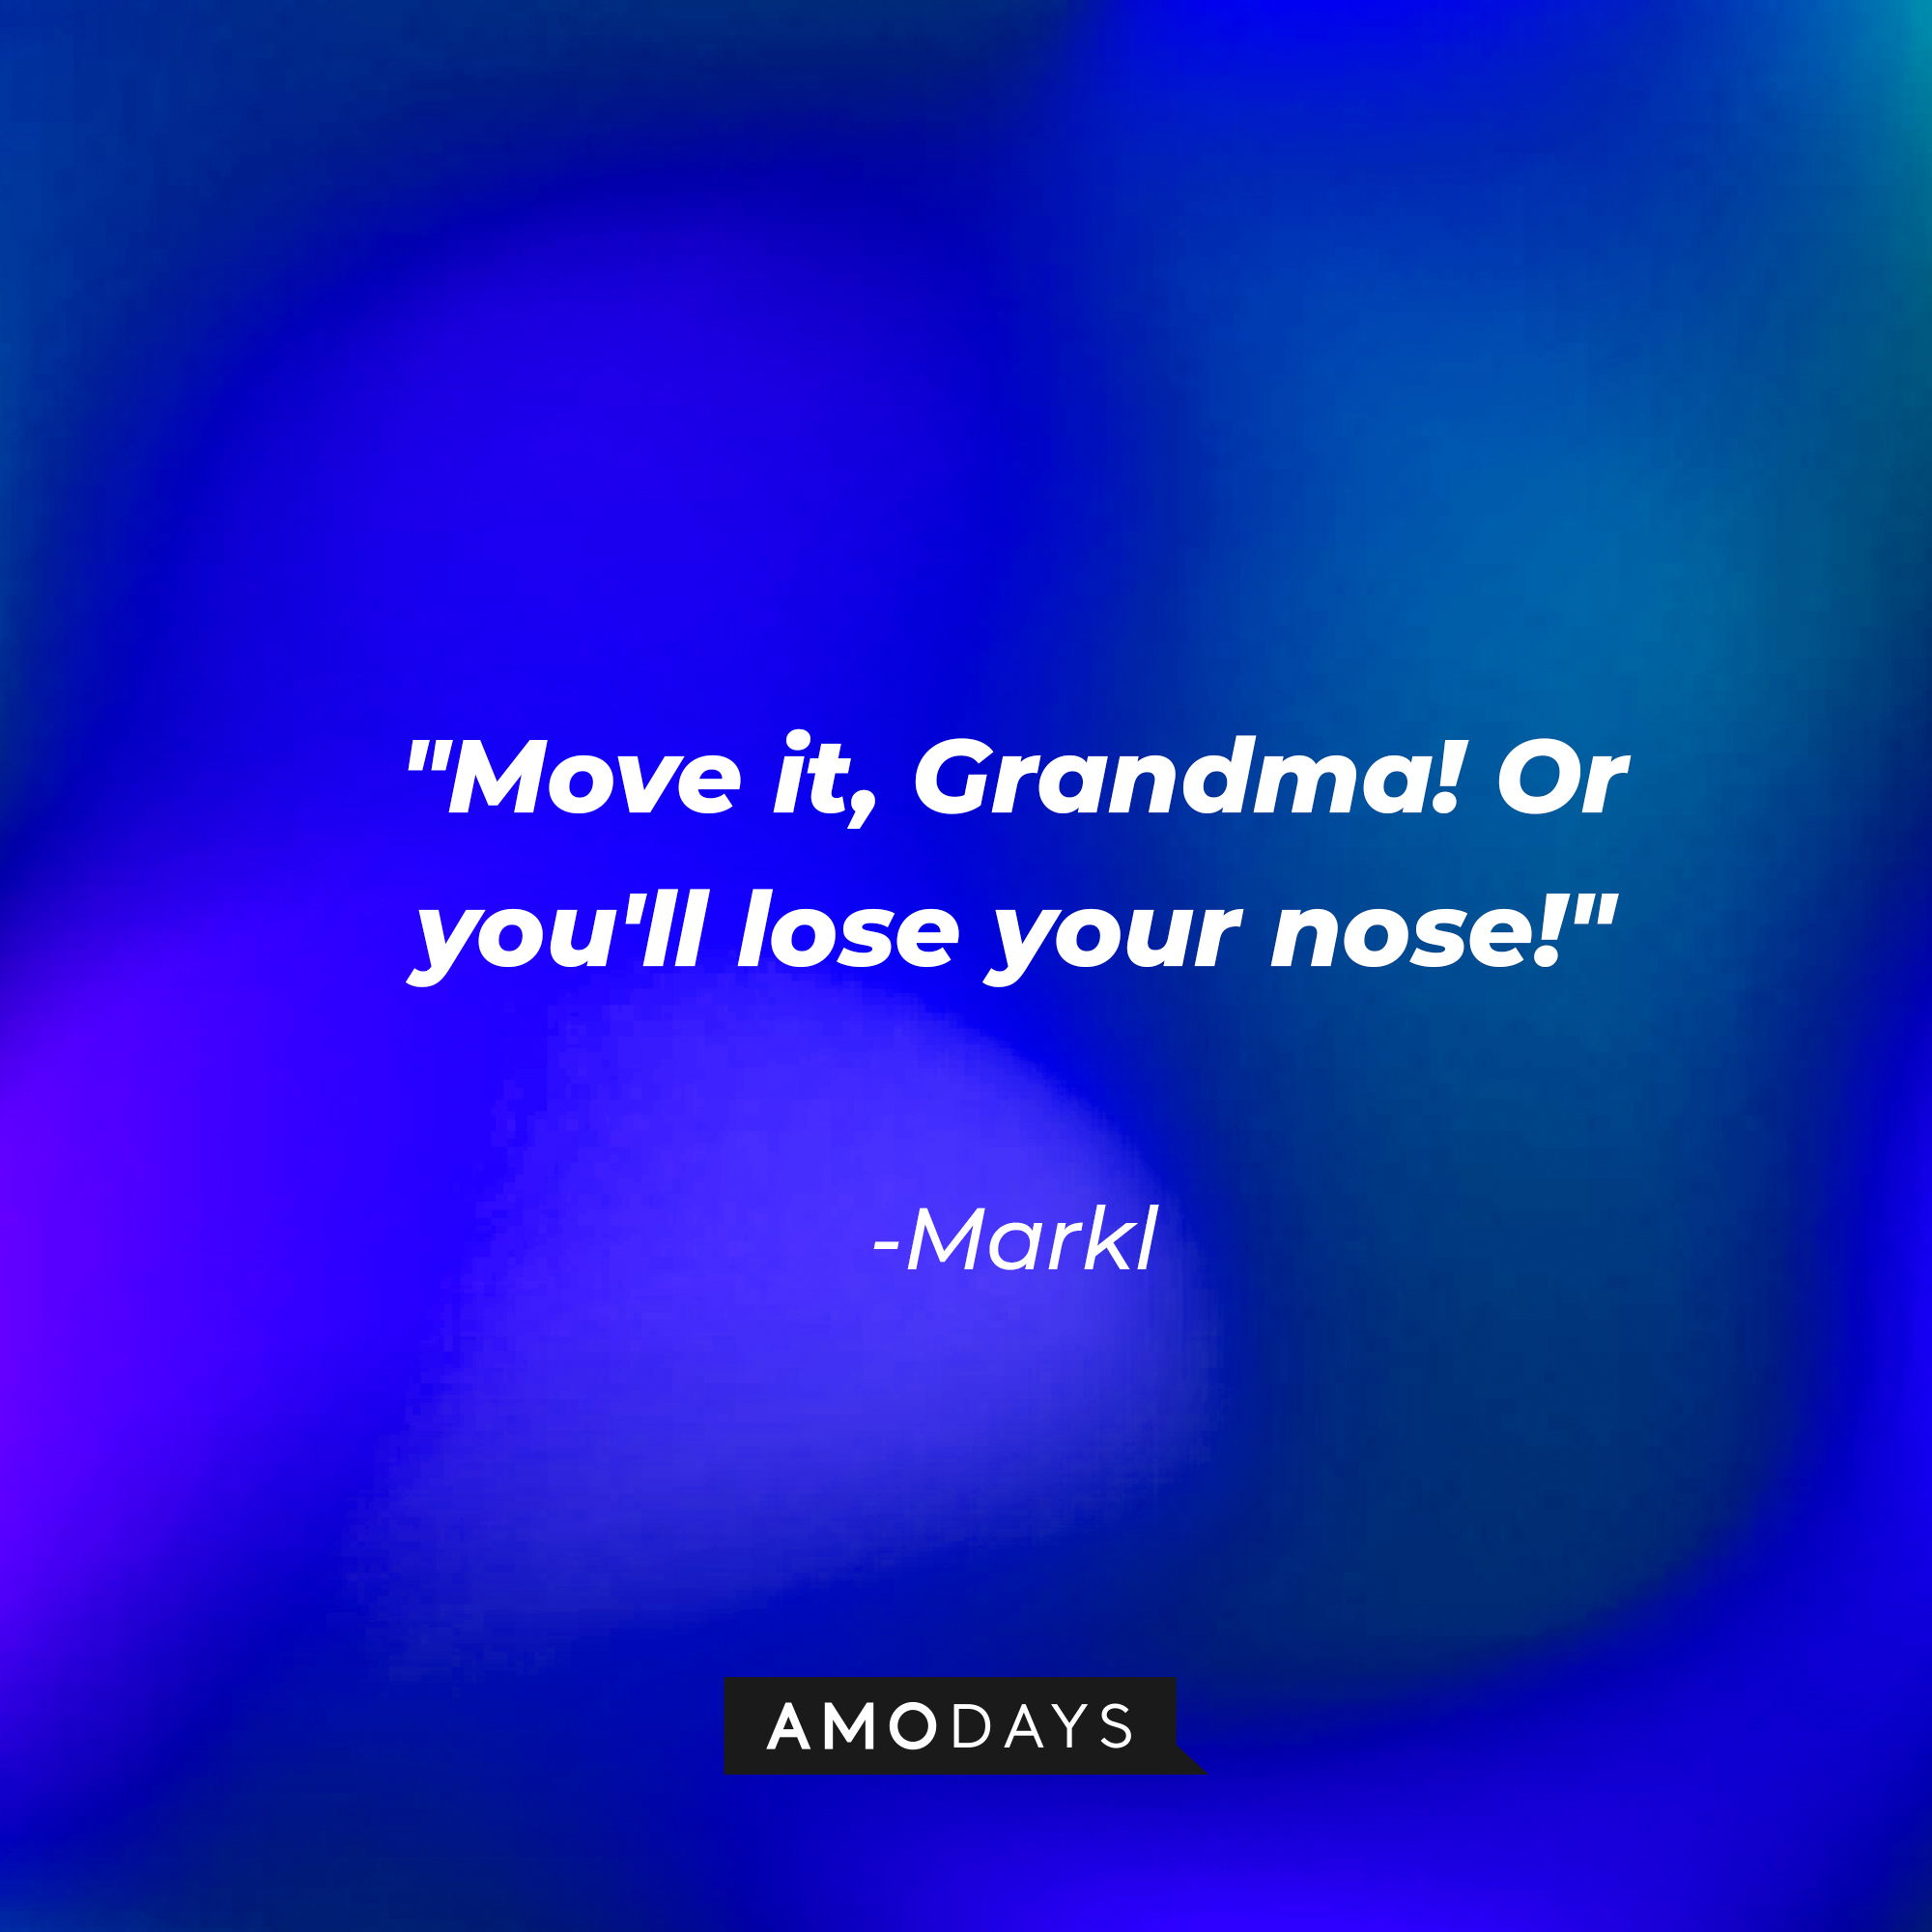 Markl's quote: "Move it, Grandma! Or you'll lose your nose!" | Source: Amodays